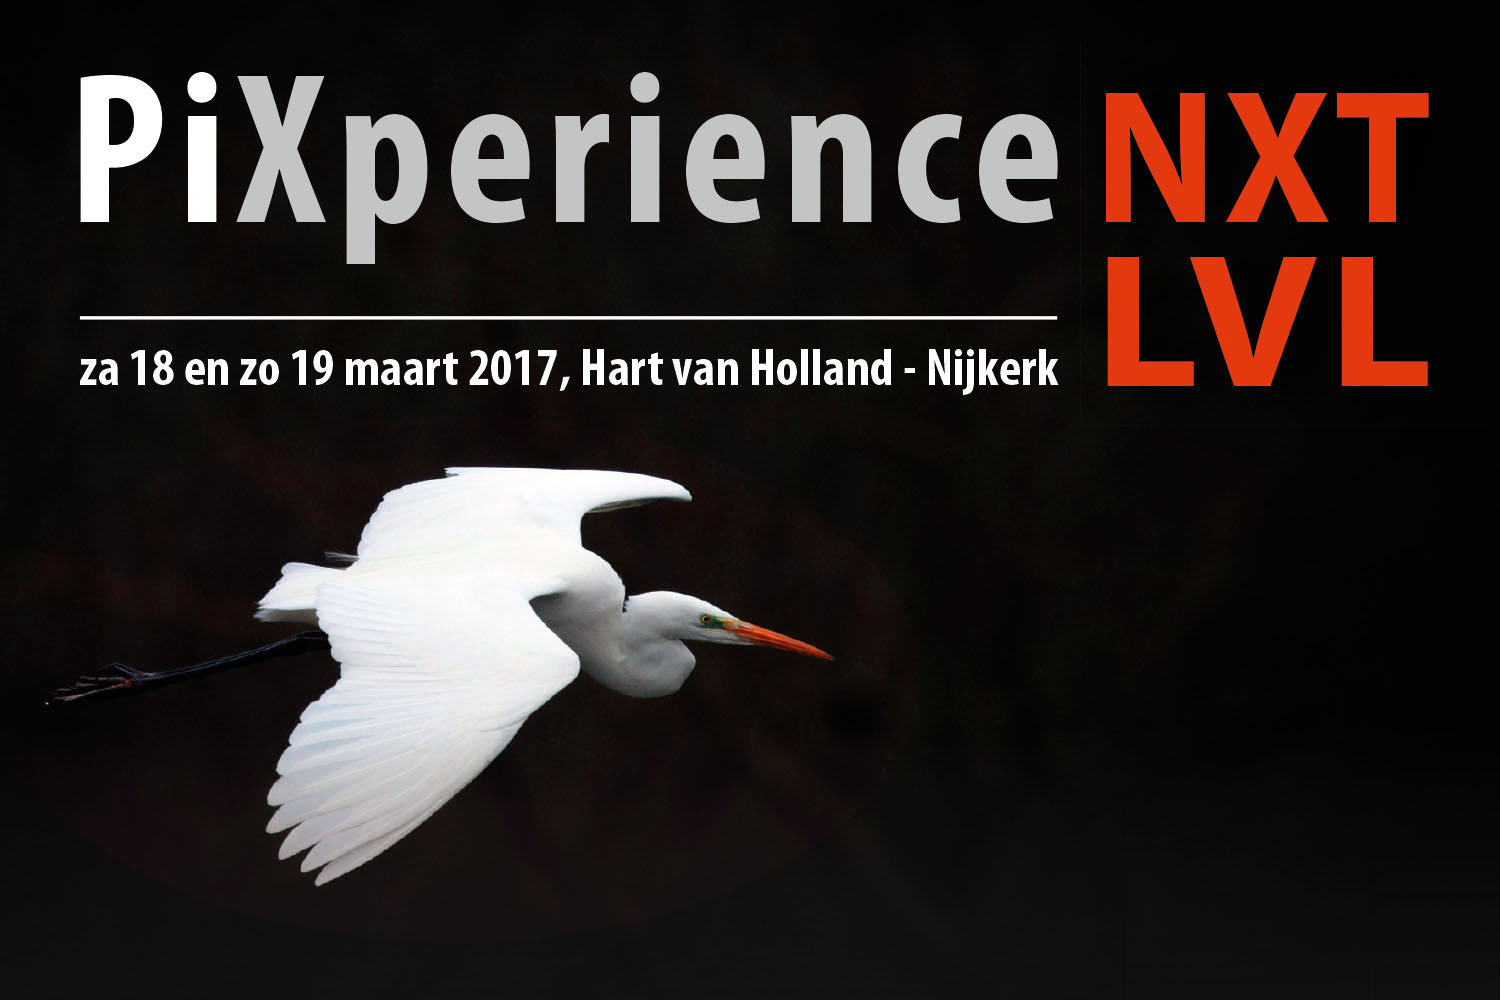 NXT_LVL_PiXperience-2017